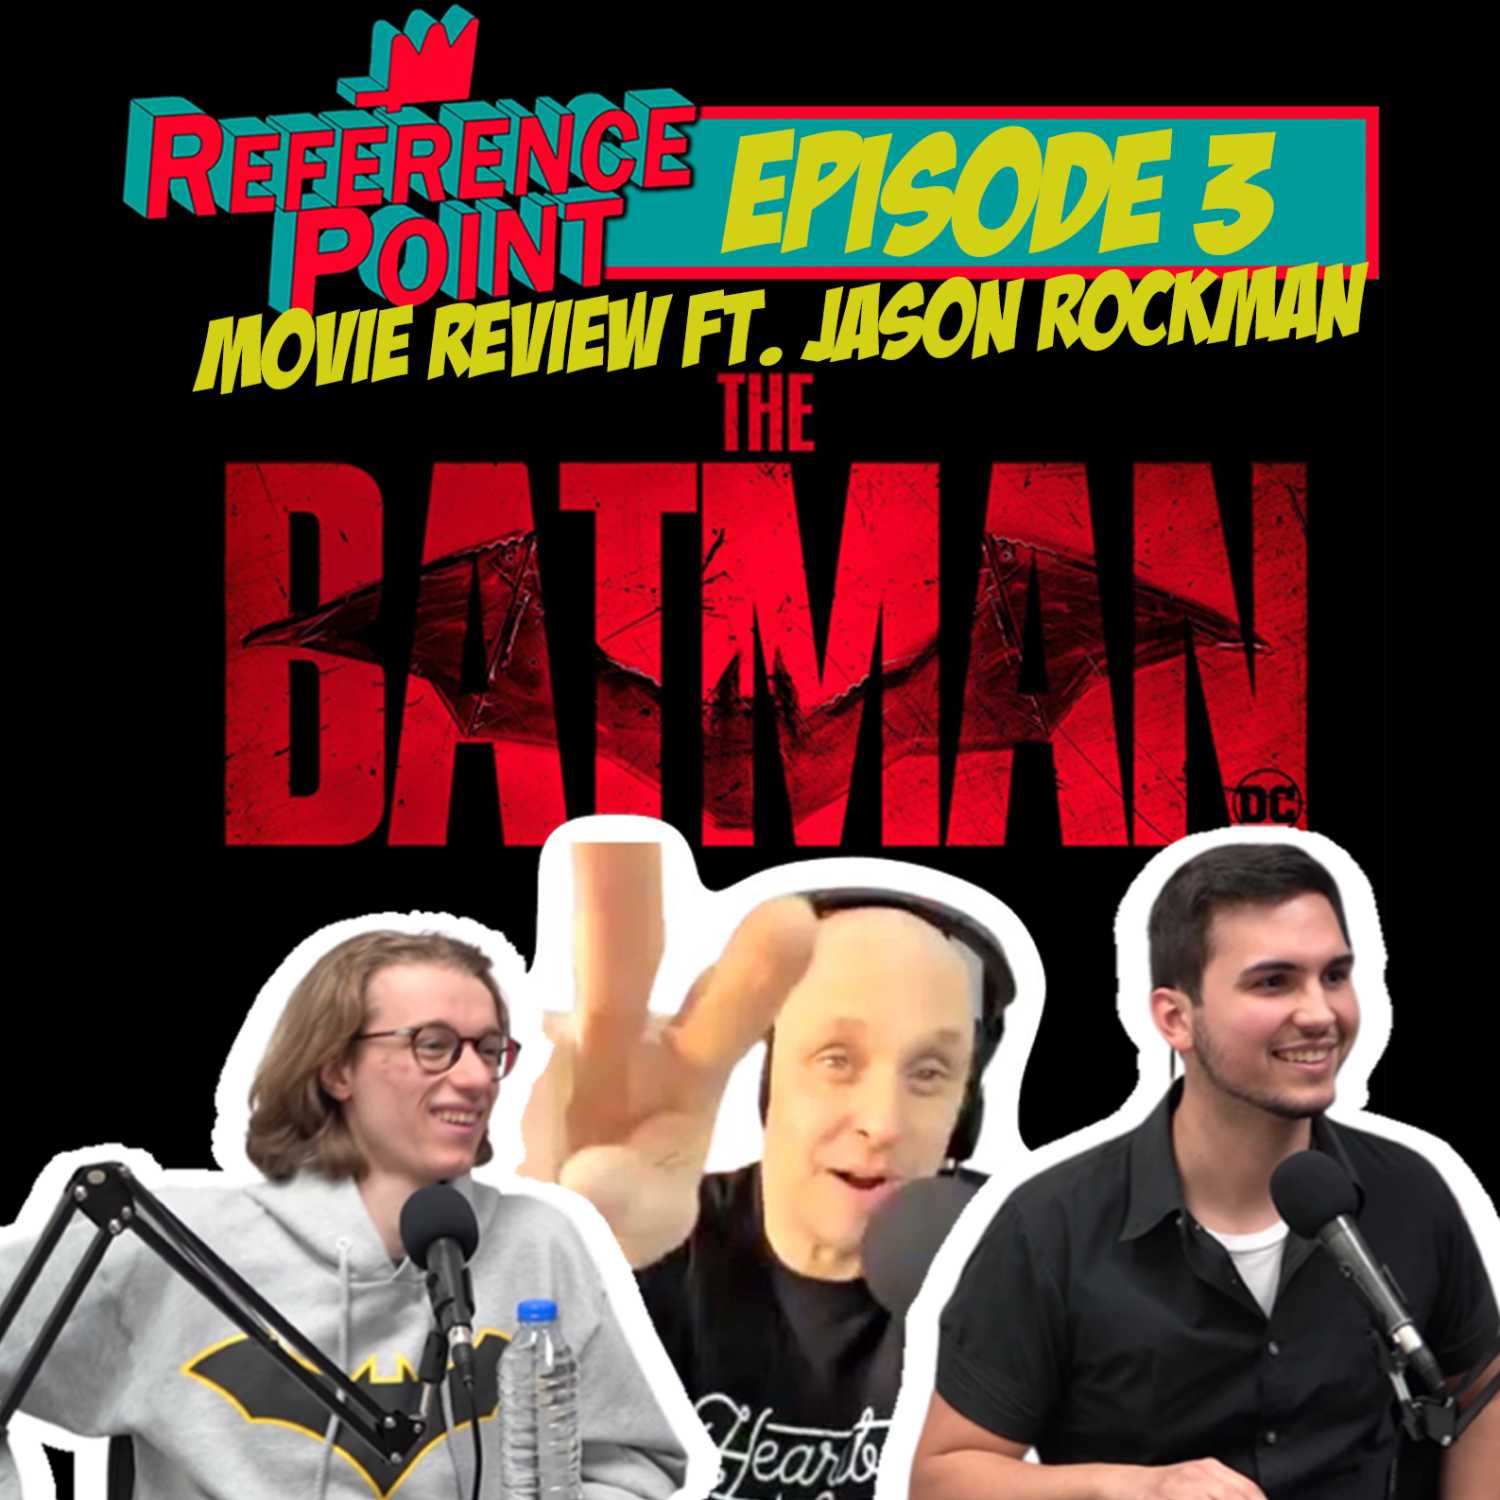 REFERENCE POINT - Episode 3 - JASON ROCKMAN "The Batman" Movie Review